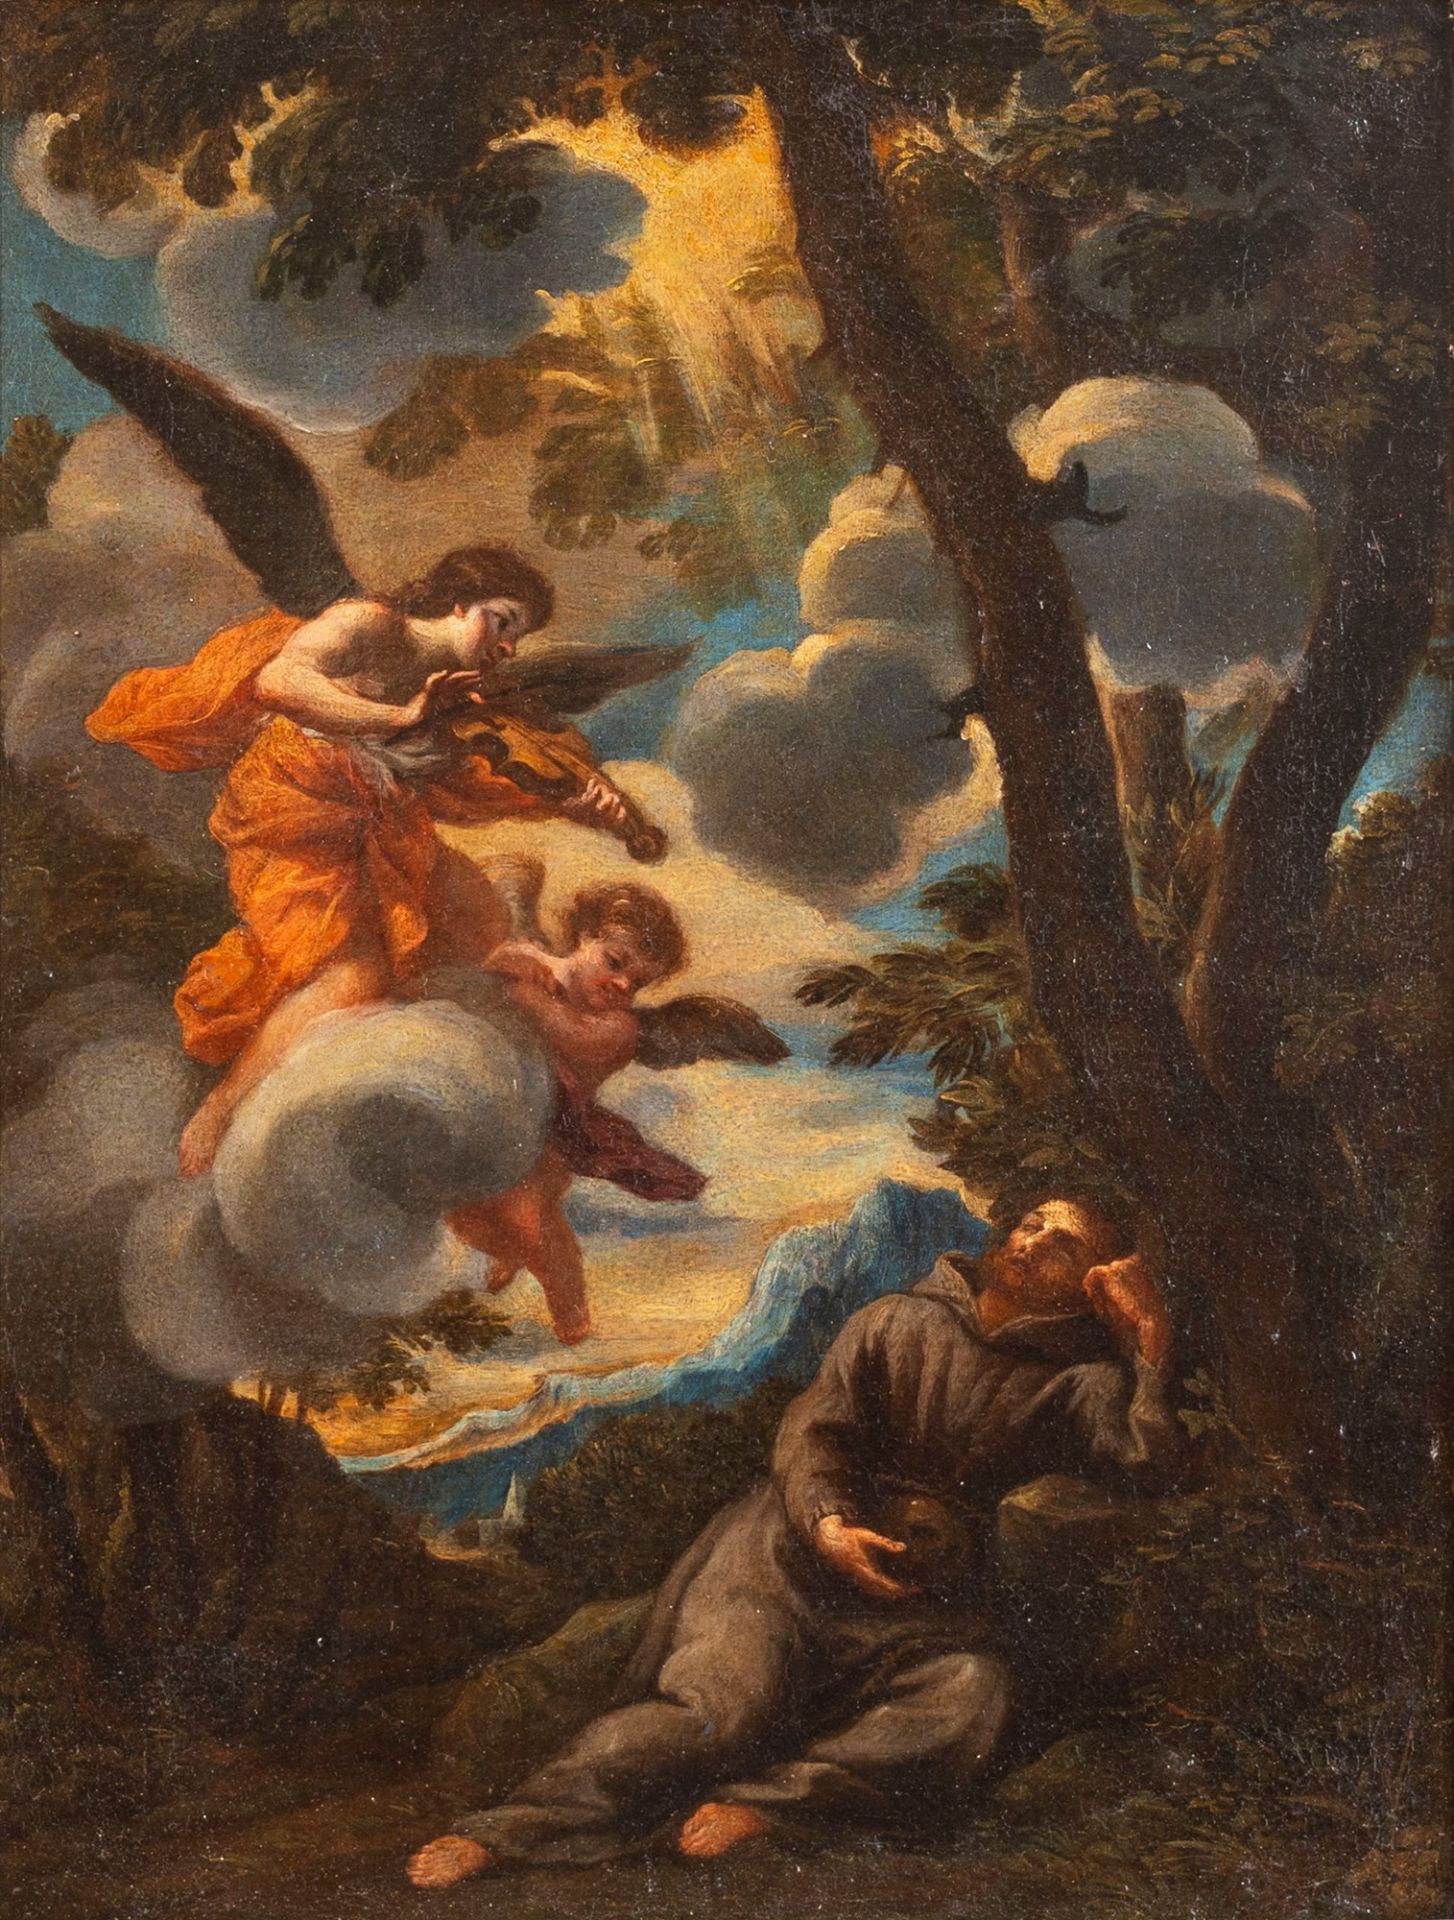 Guillaume Courtois (Saint-Hippolyte 1628-Roma 1679) - Ecstasy of Saint Francis of Assisi